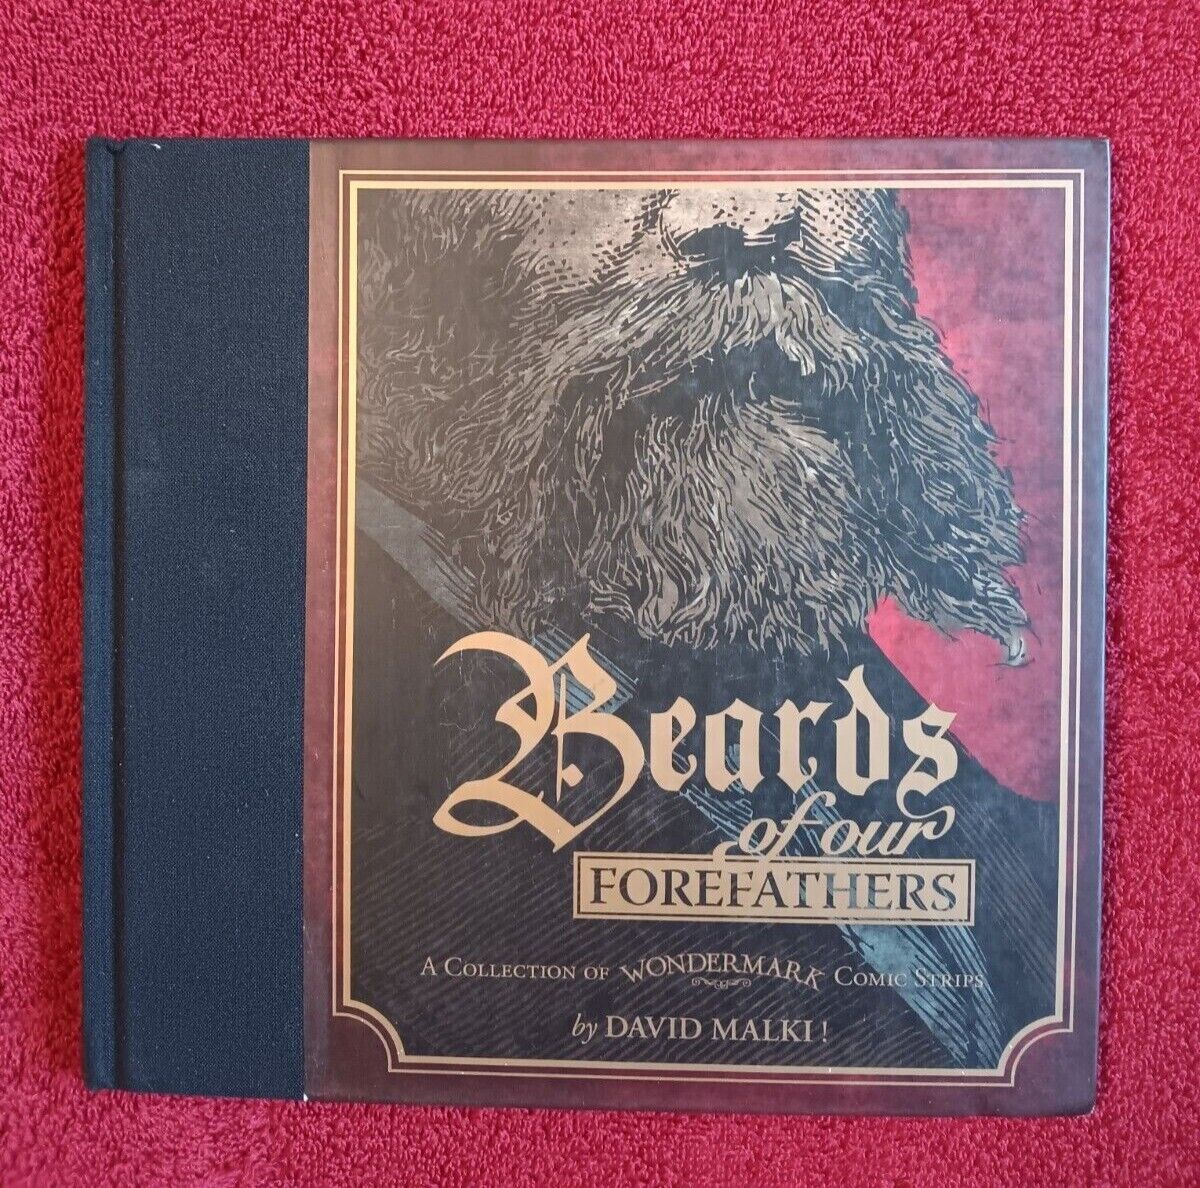 \'Beards of our Forefathers\' HC 1st Ed. 2008 David Malki  - Wondermark Comics